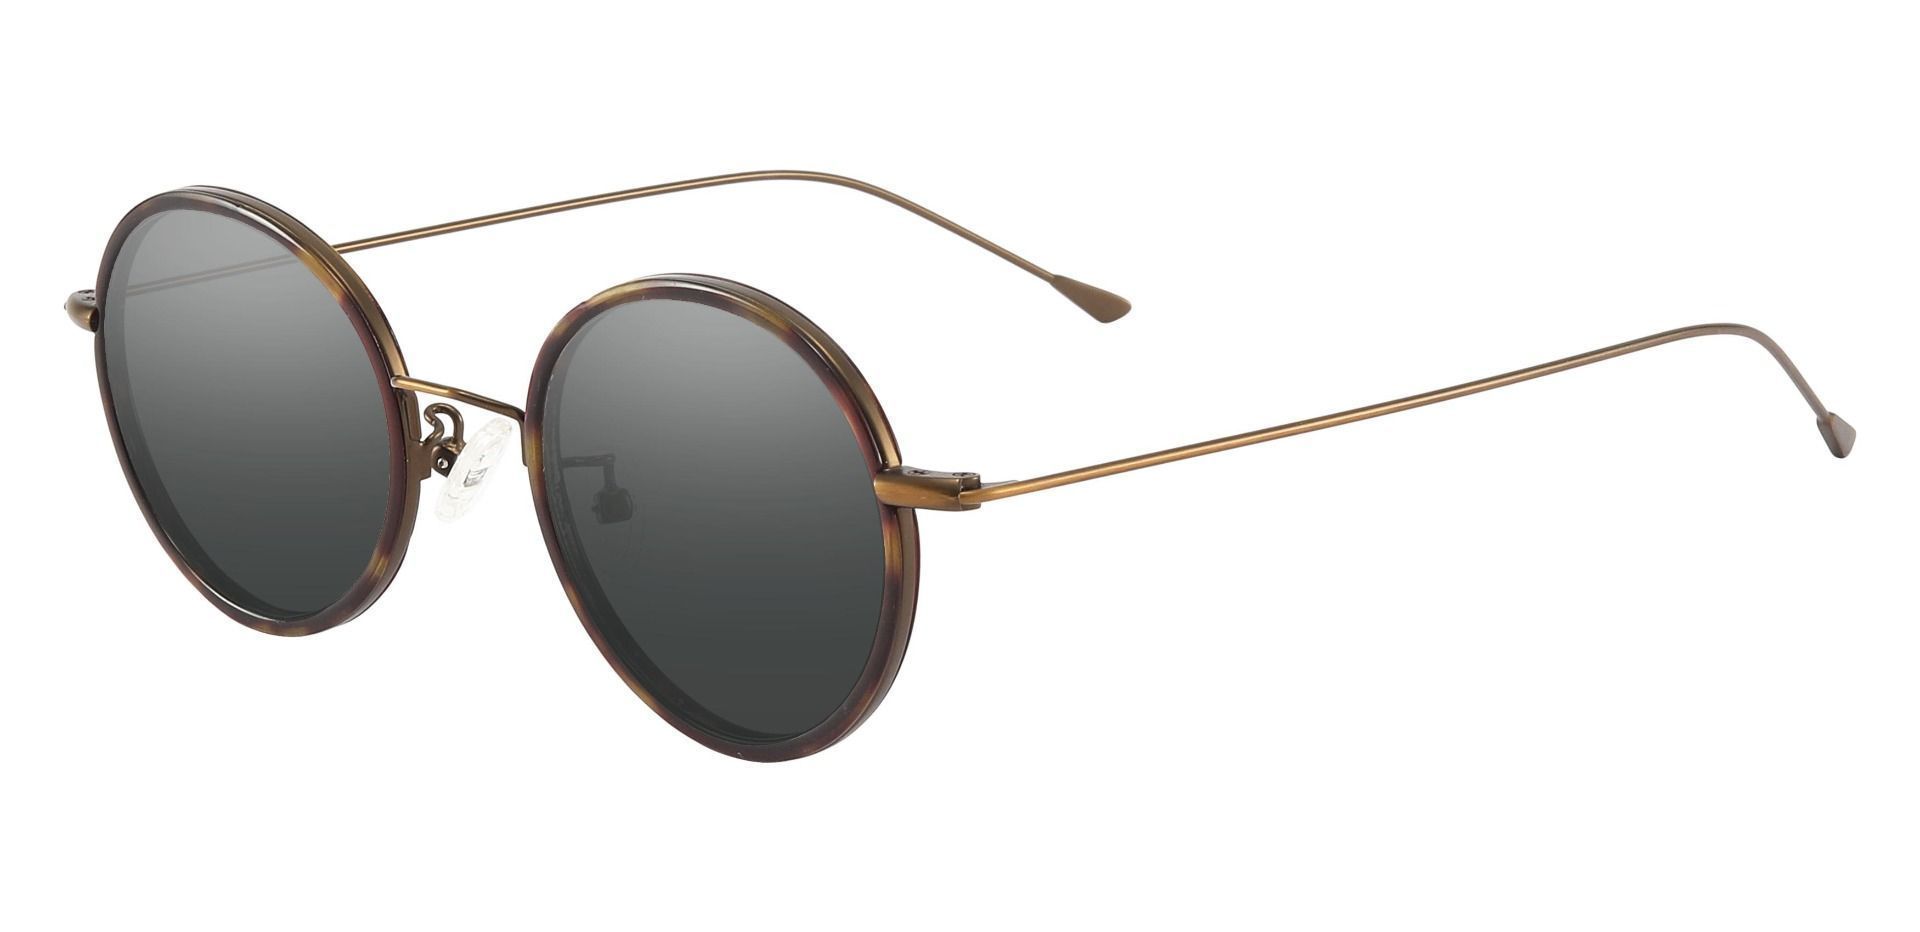 Malverne Oval Lined Bifocal Sunglasses - Tortoise Frame With Gray Lenses